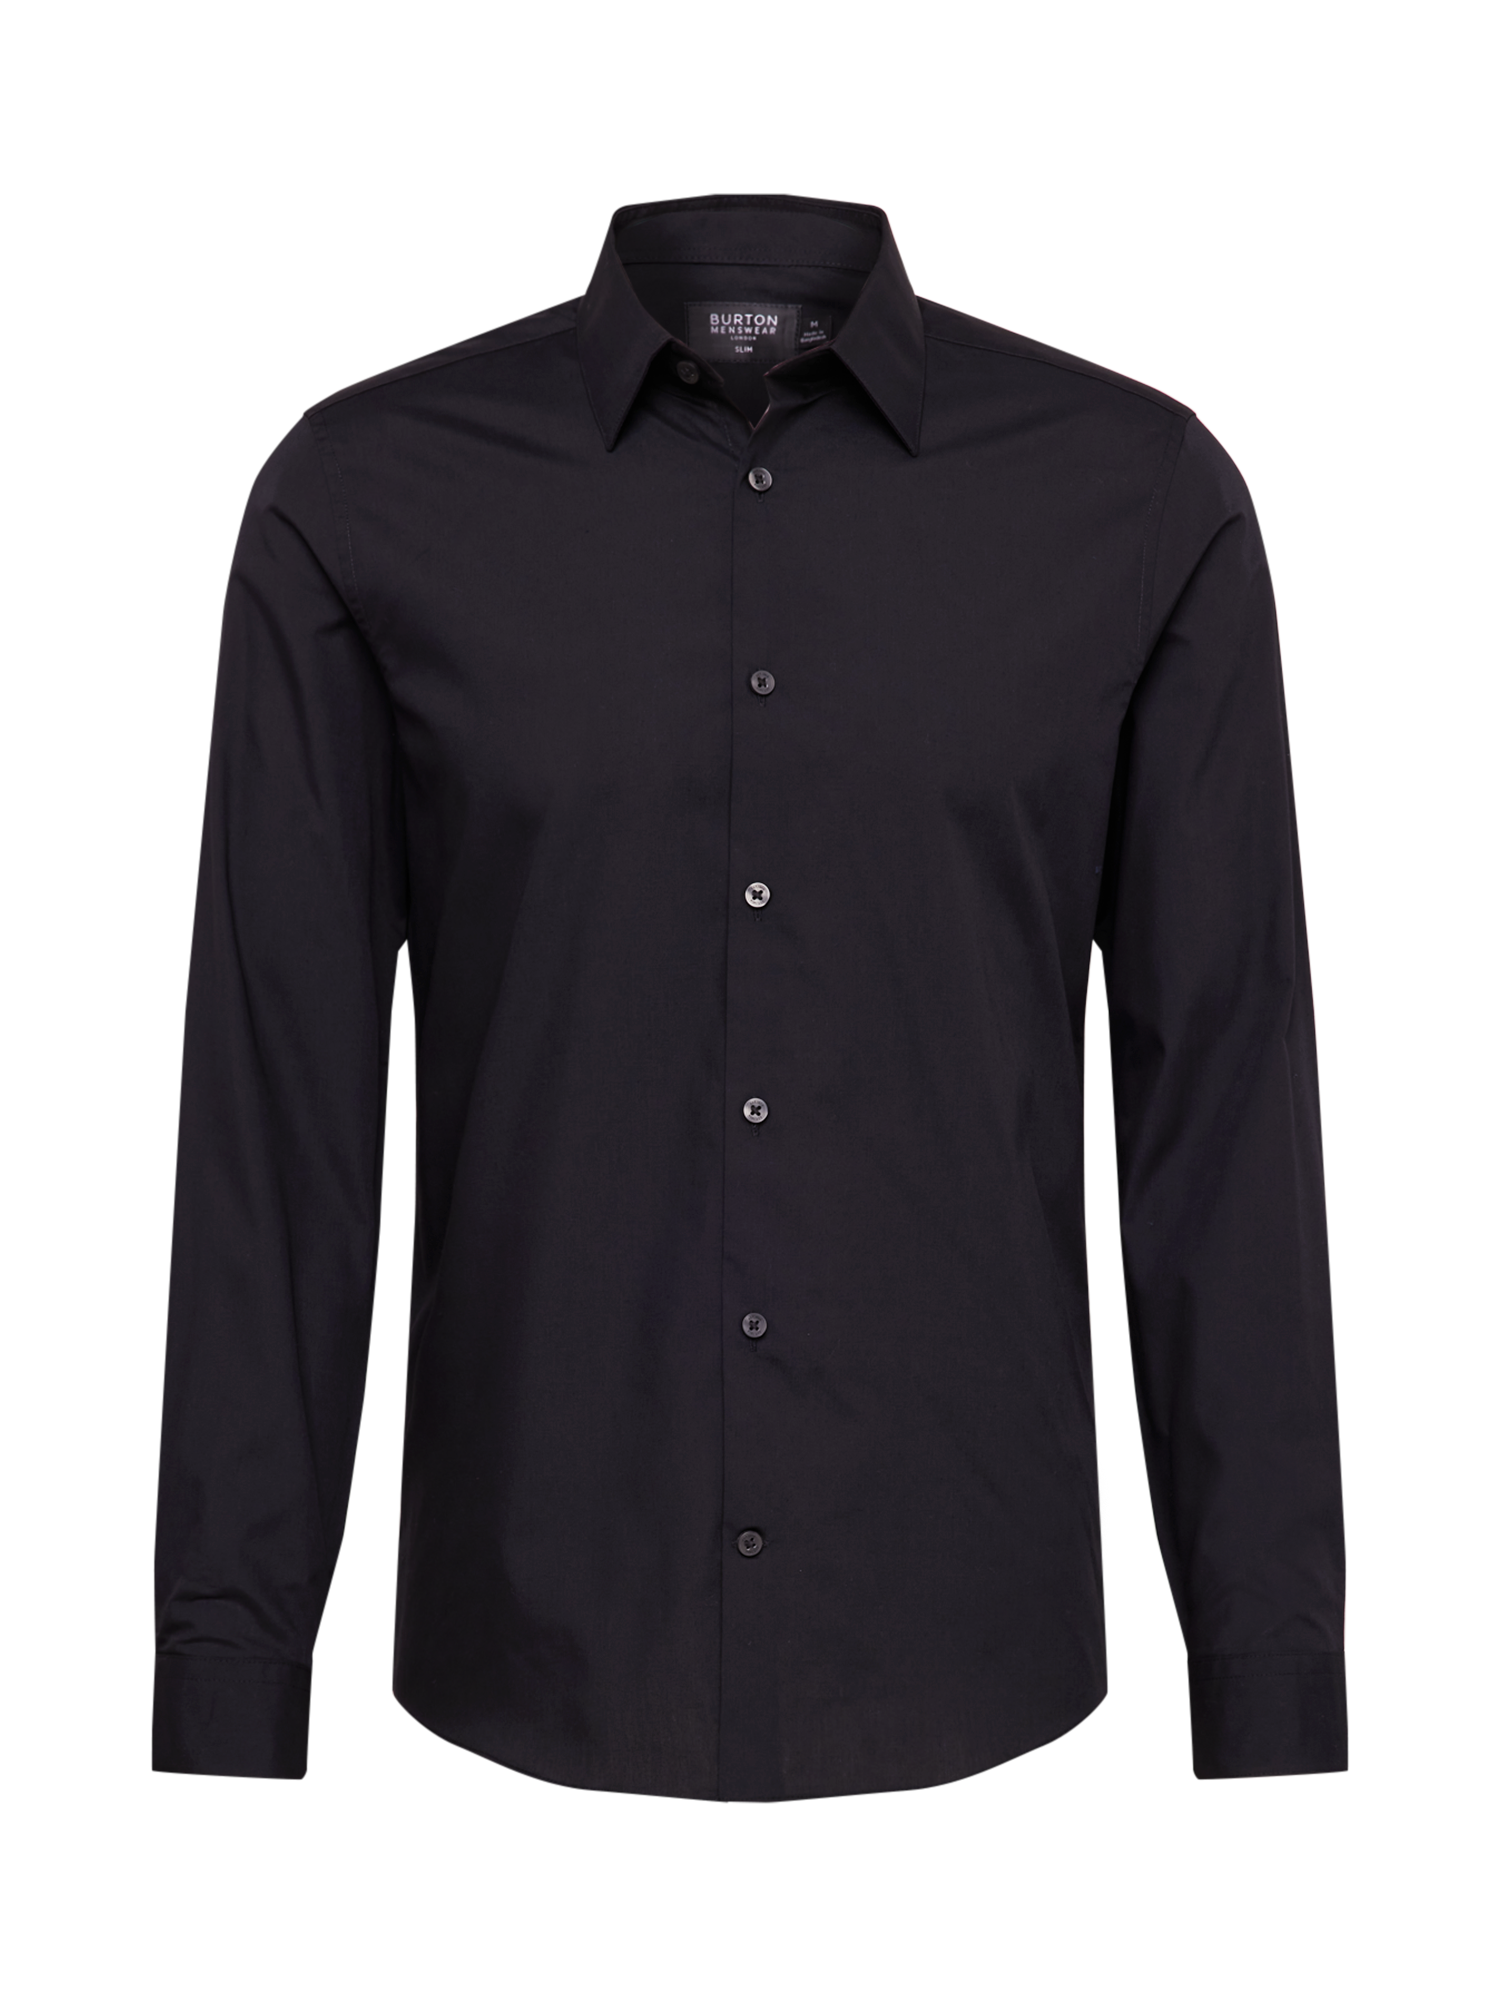 IfVVB Koszule BURTON MENSWEAR LONDON Koszula w kolorze Czarnym 